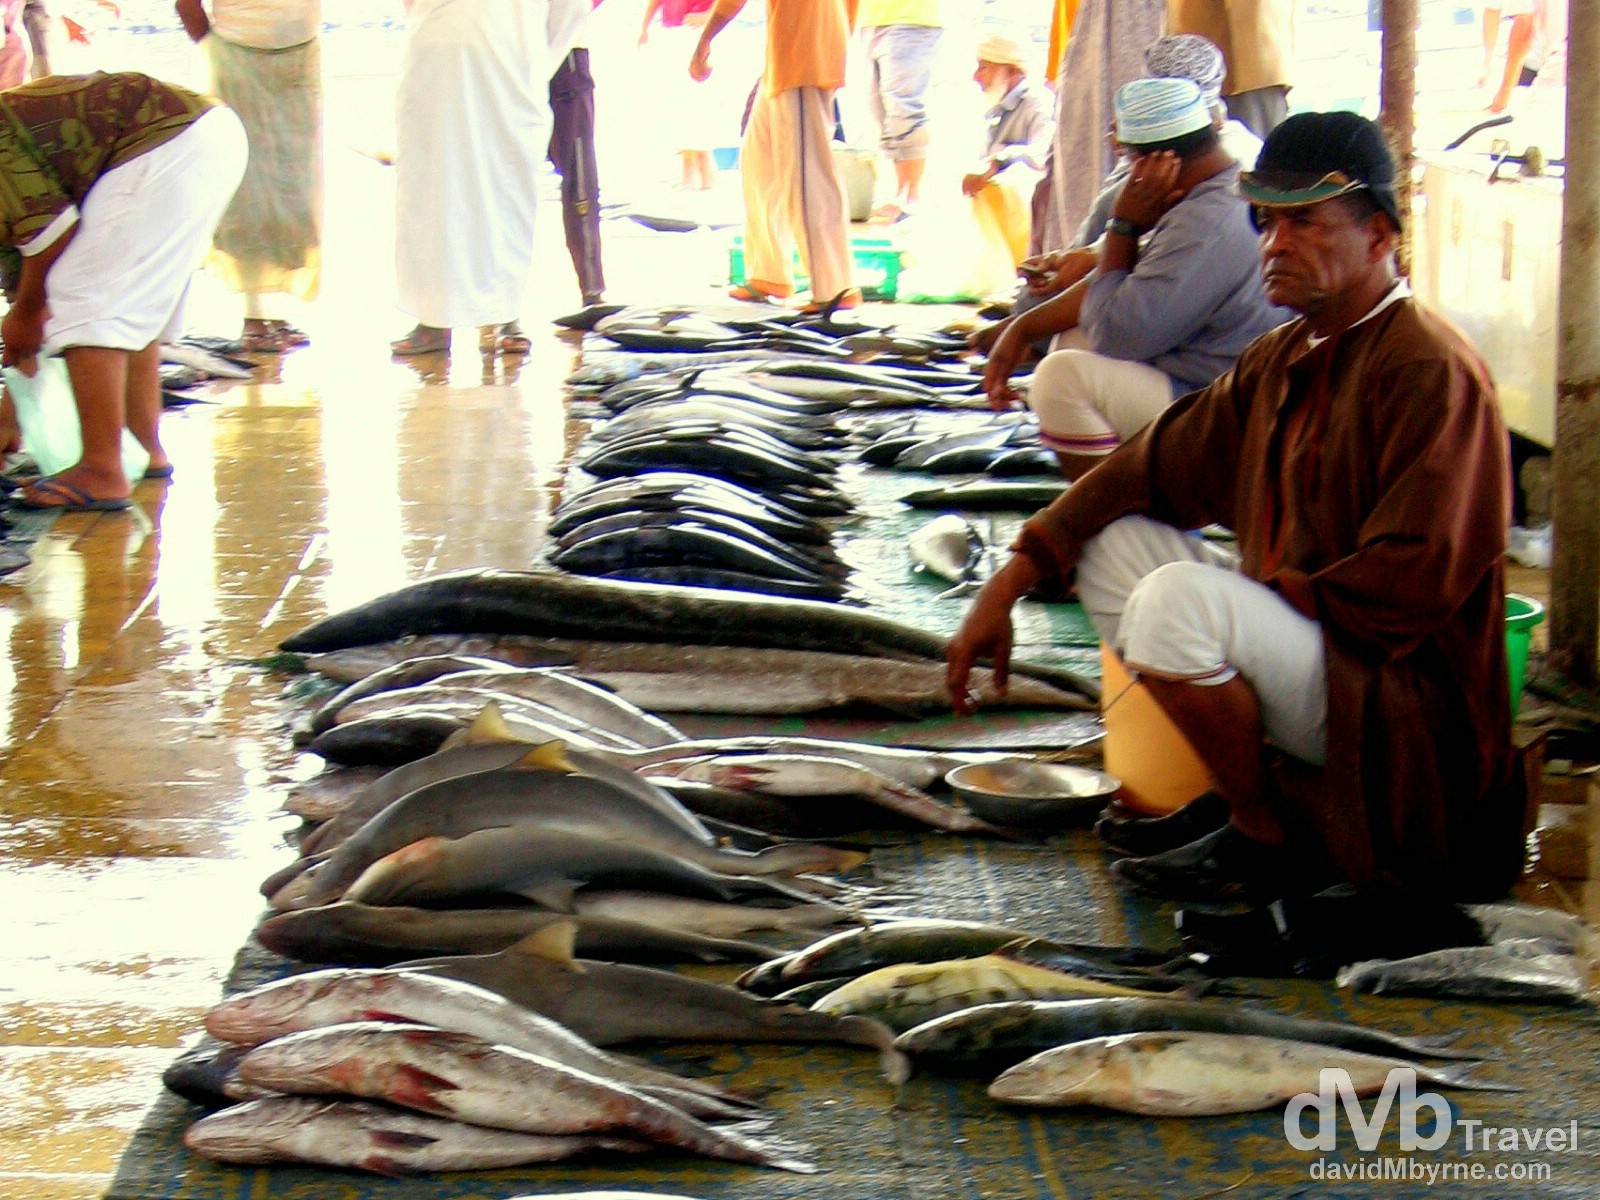 Fish market in Muscat, Oman. April 6, 2008.